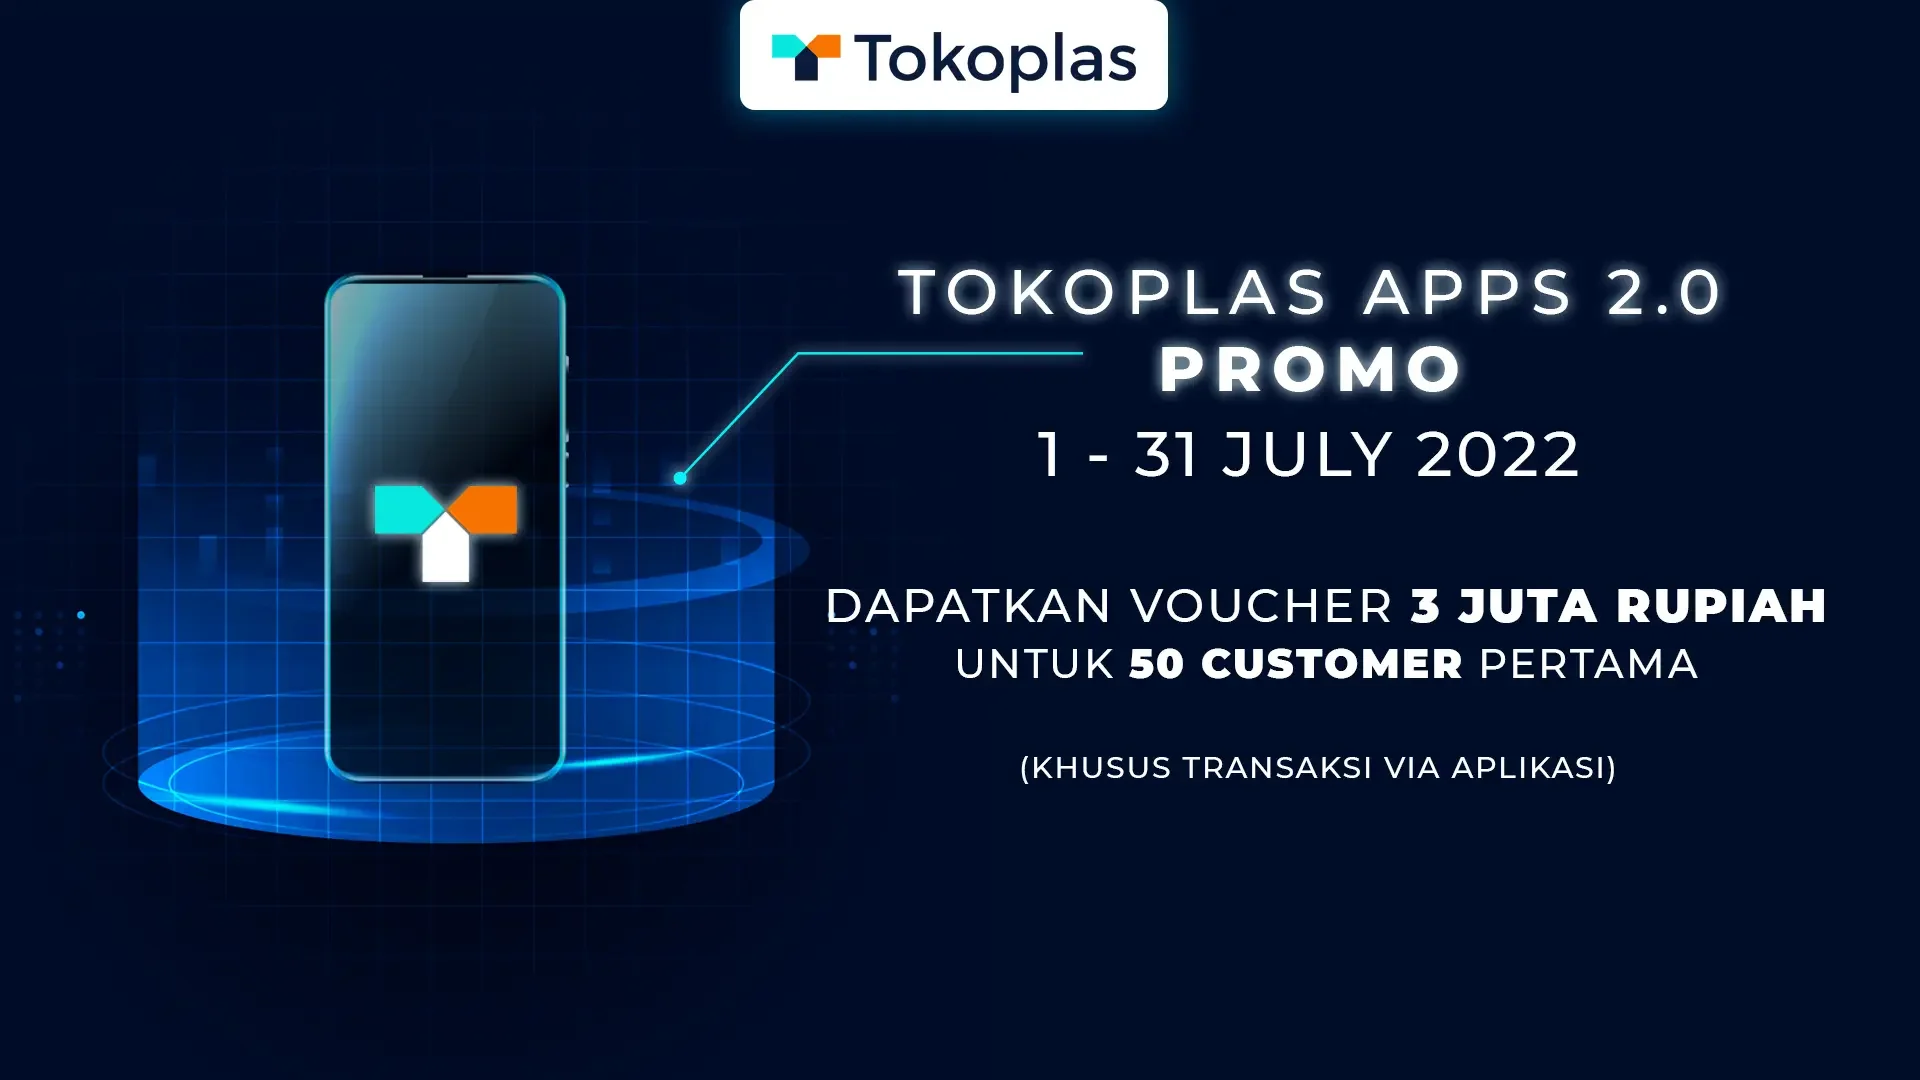 Tokoplas Ecommerce Indonesia